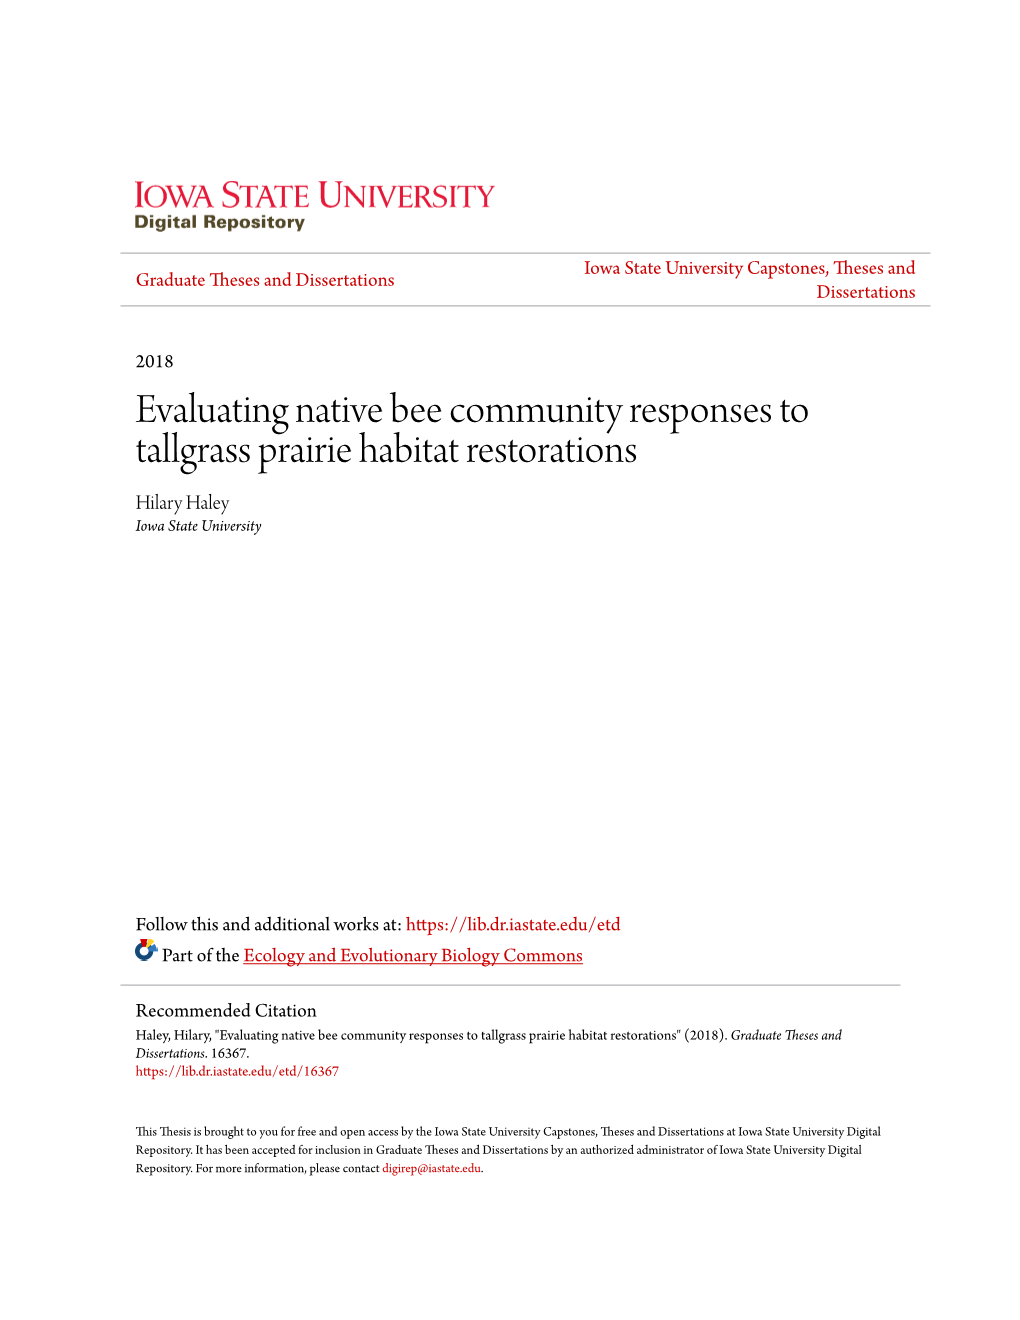 Evaluating Native Bee Community Responses to Tallgrass Prairie Habitat Restorations Hilary Haley Iowa State University